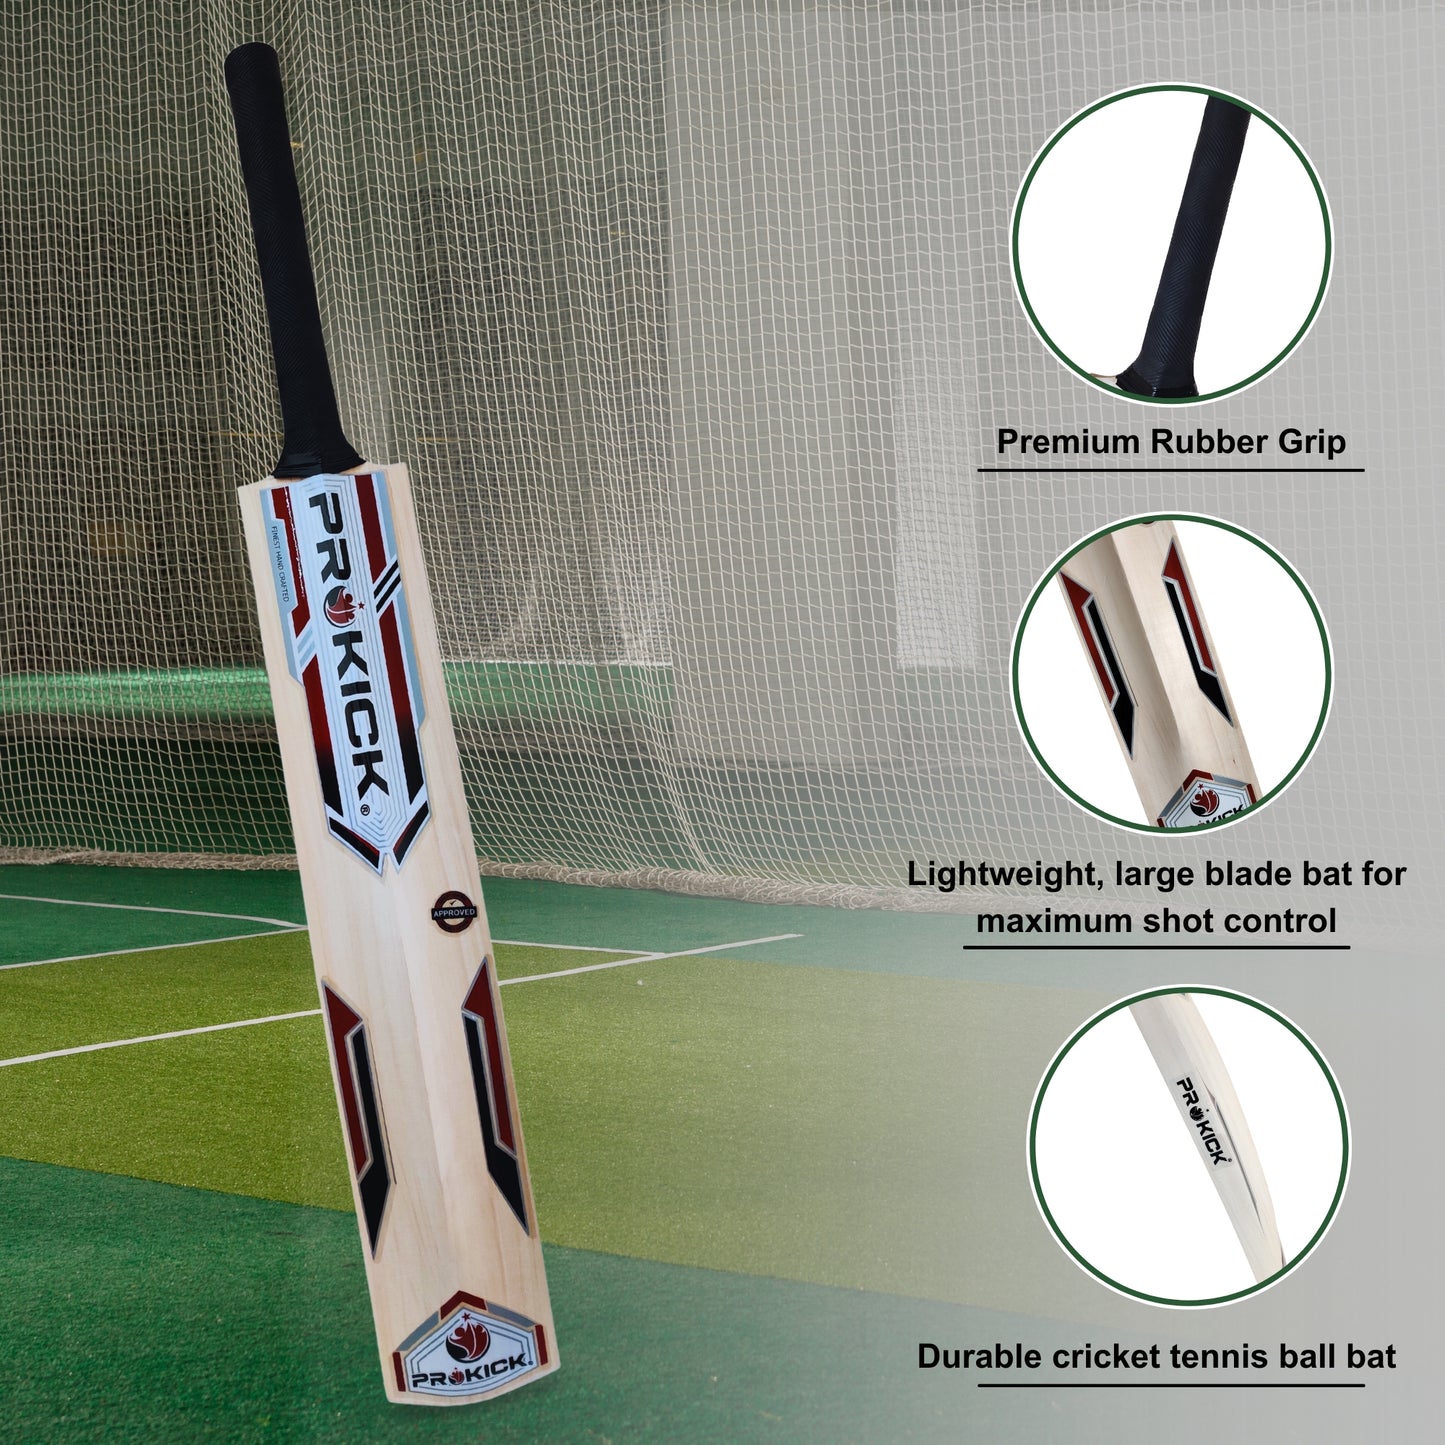 Prokick Magnum Indian Willow Cricket Tennis Ball Bat - Best Price online Prokicksports.com